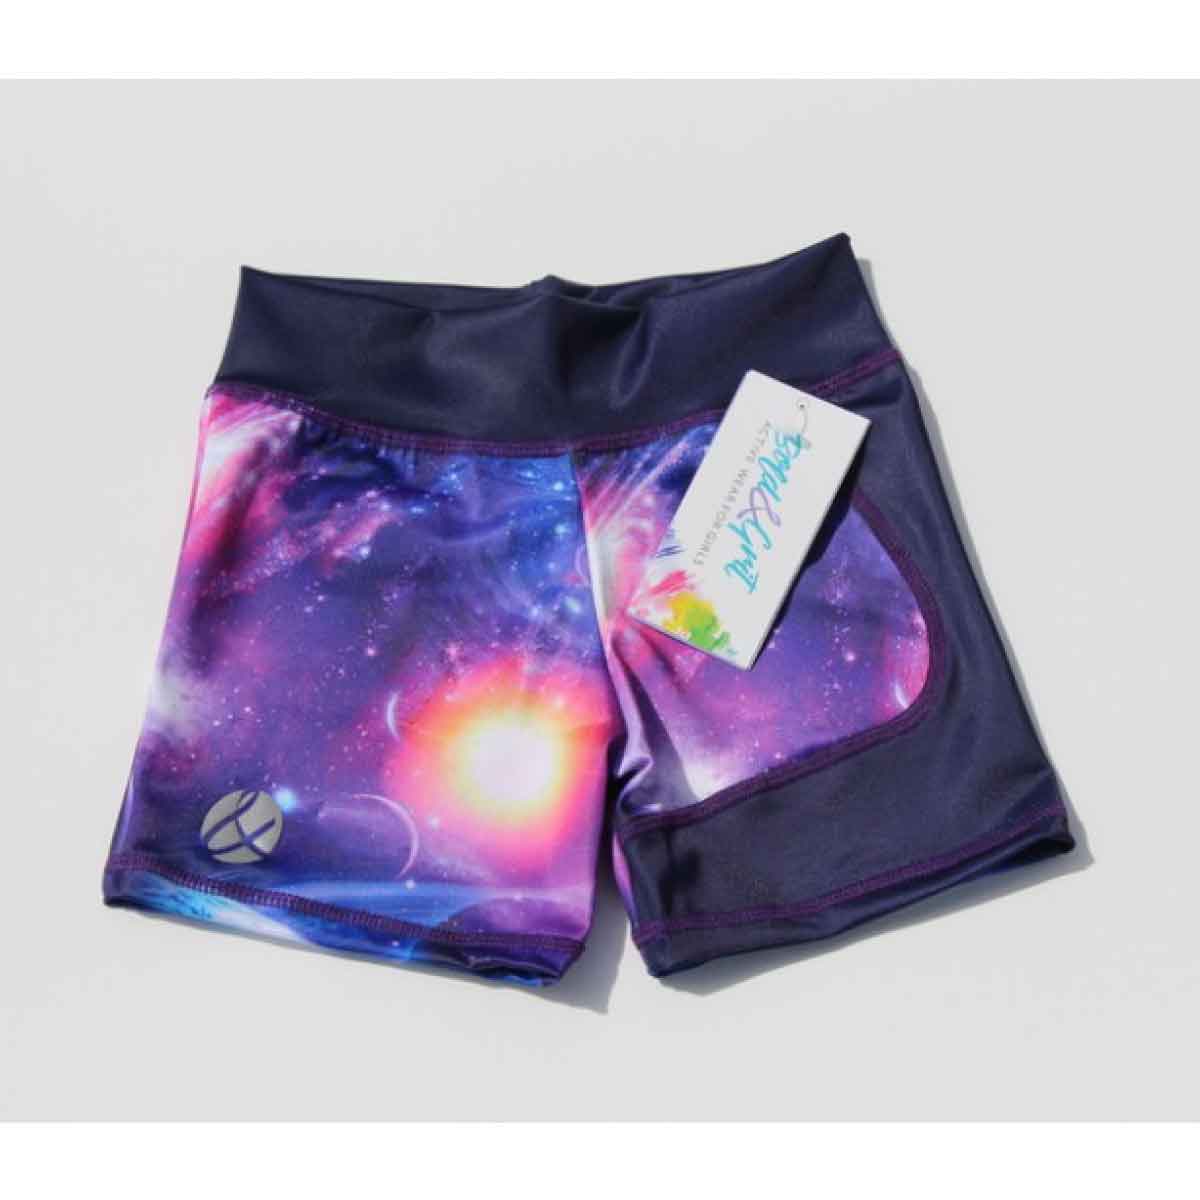 Space girls' shorts